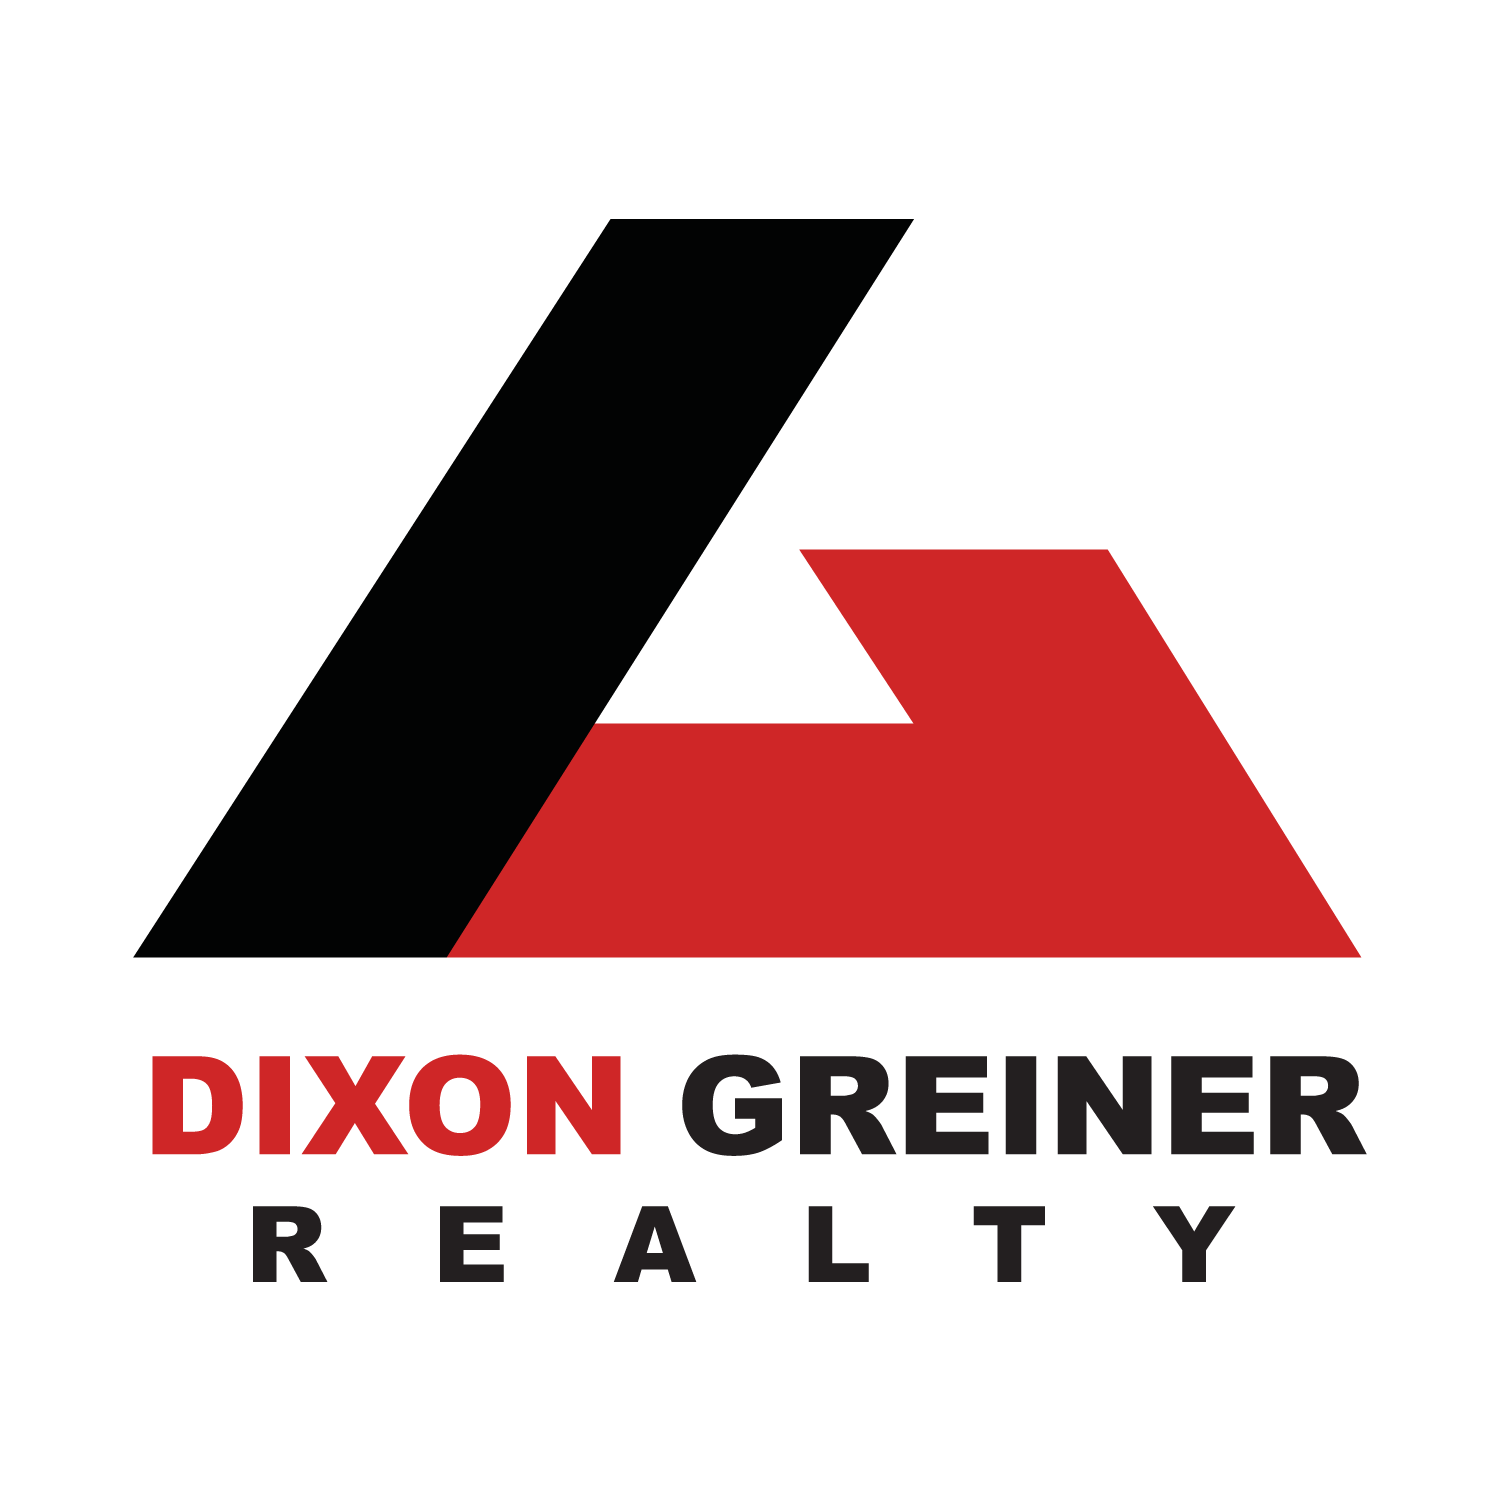 Dixon Greiner Realty, LLC